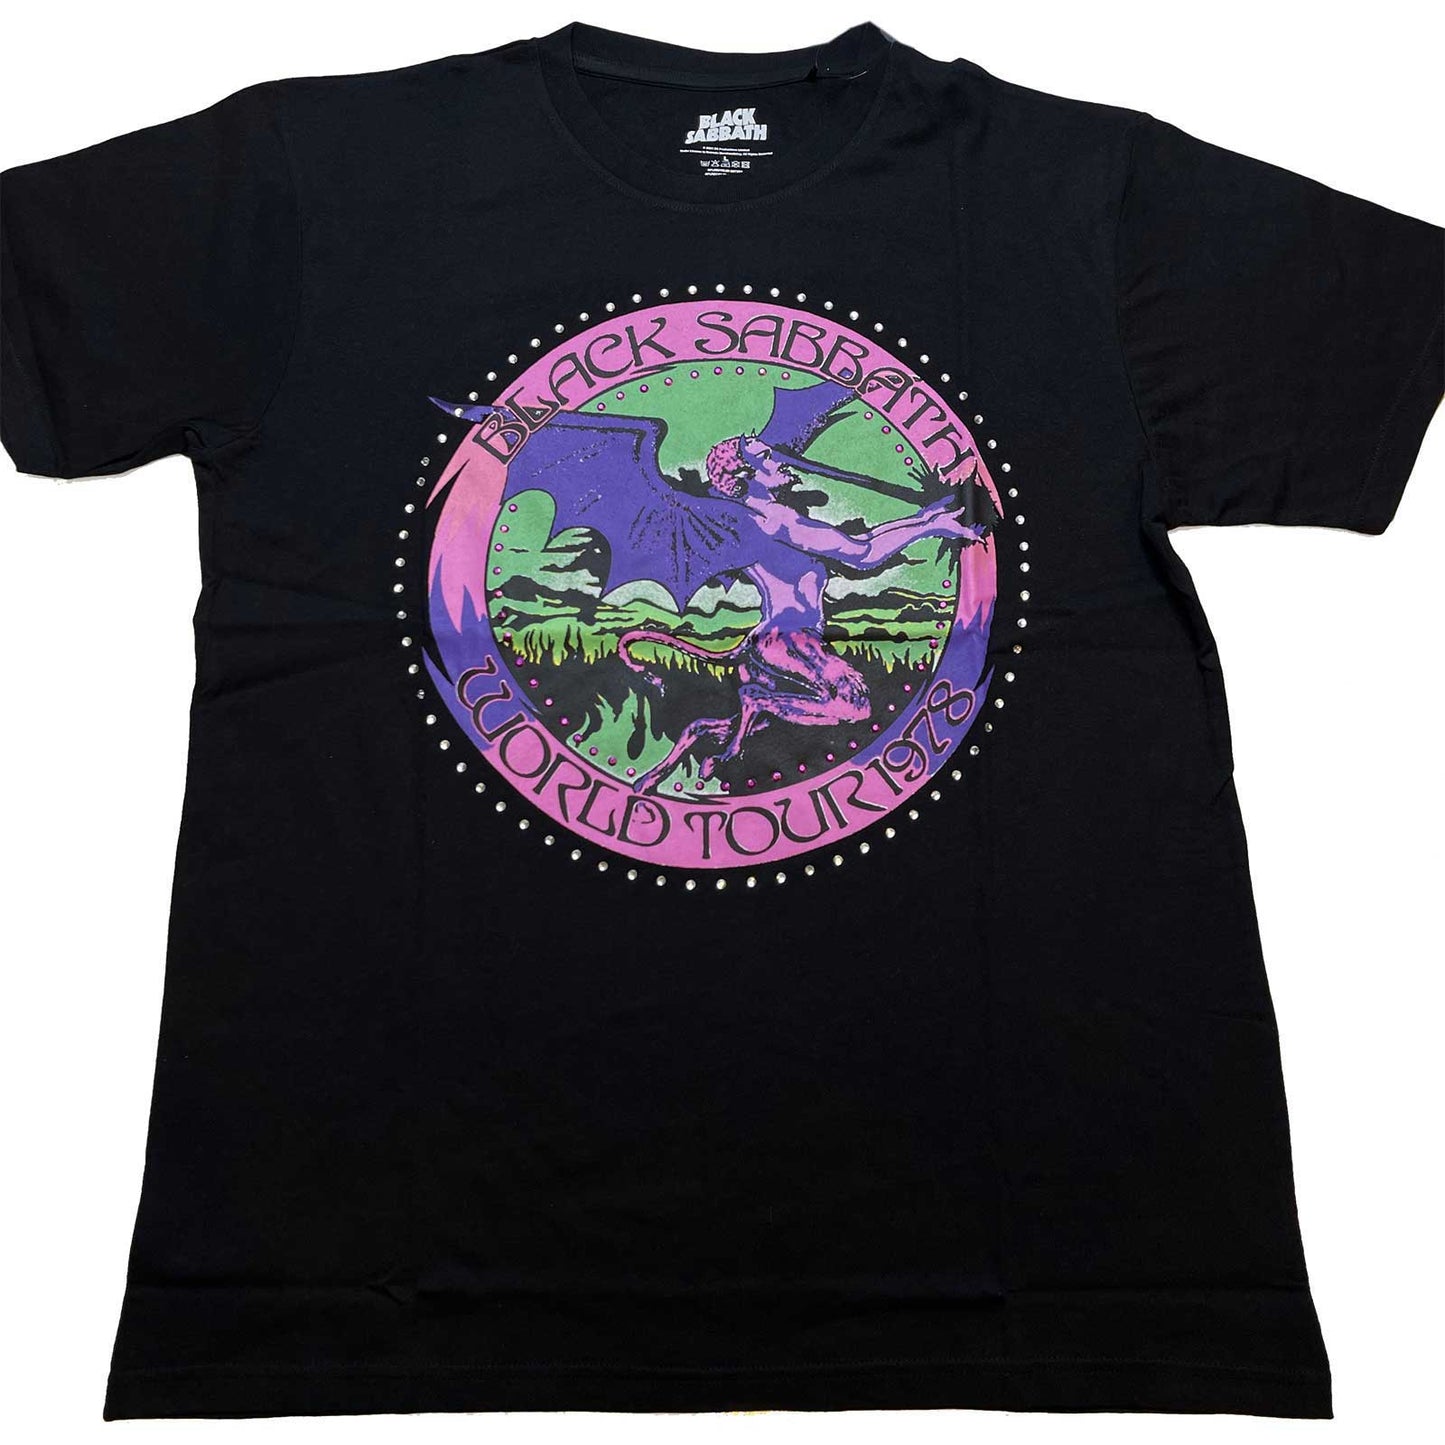 Black Sabbath Kids Embellished T-Shirt: Tour '78 (Diamante)